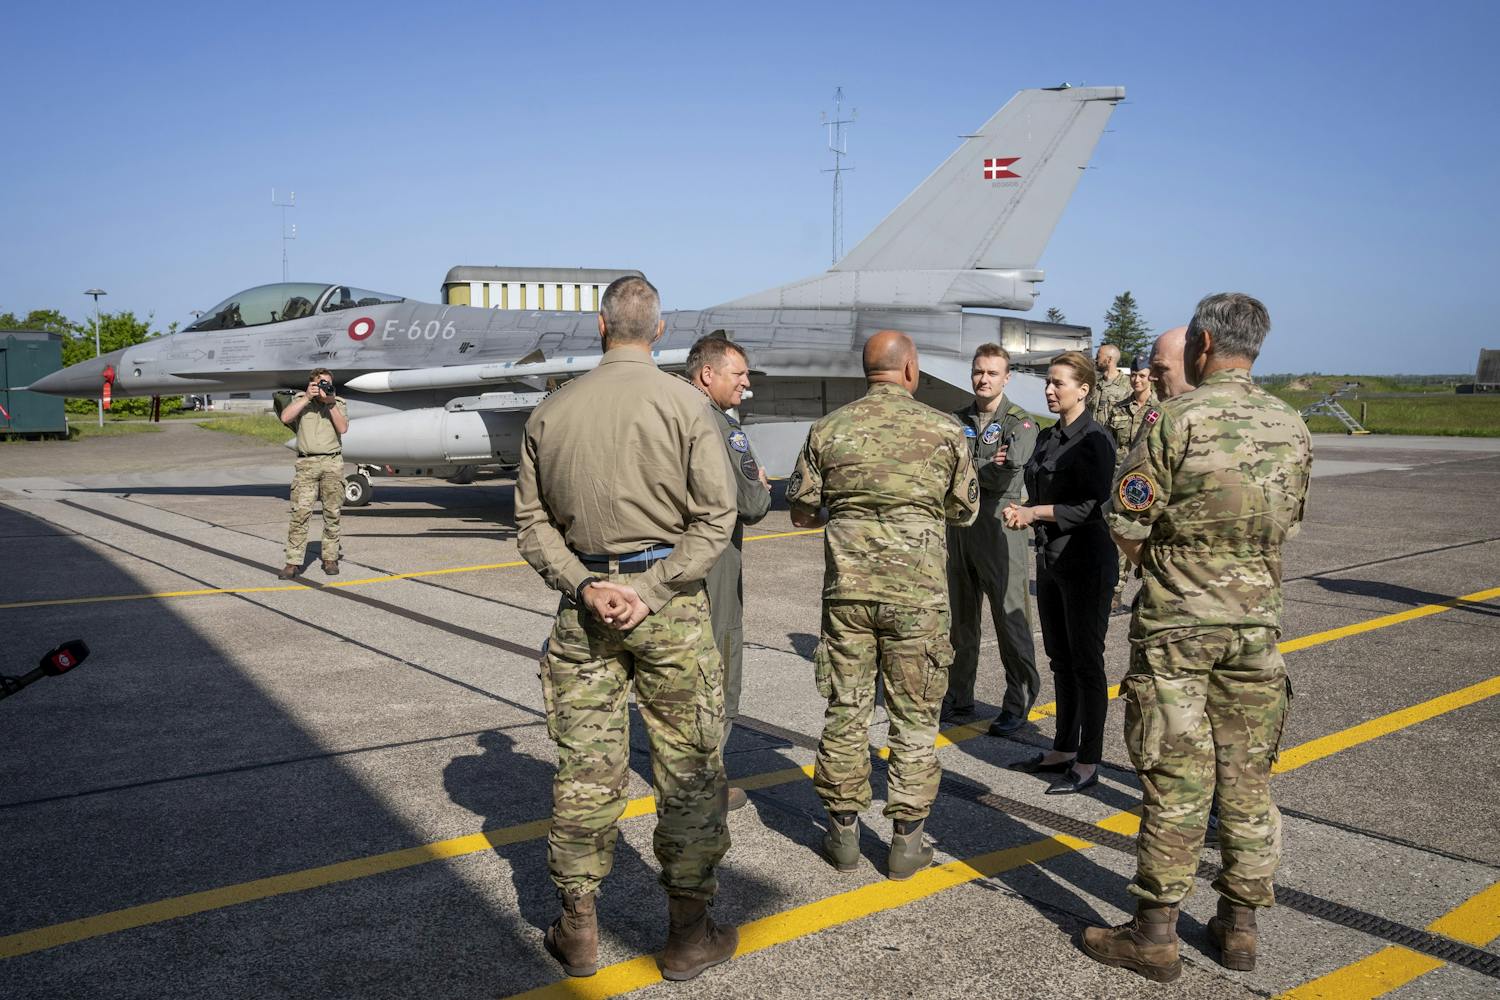 ‘The Netherlands will send F-16s to Ukraine’